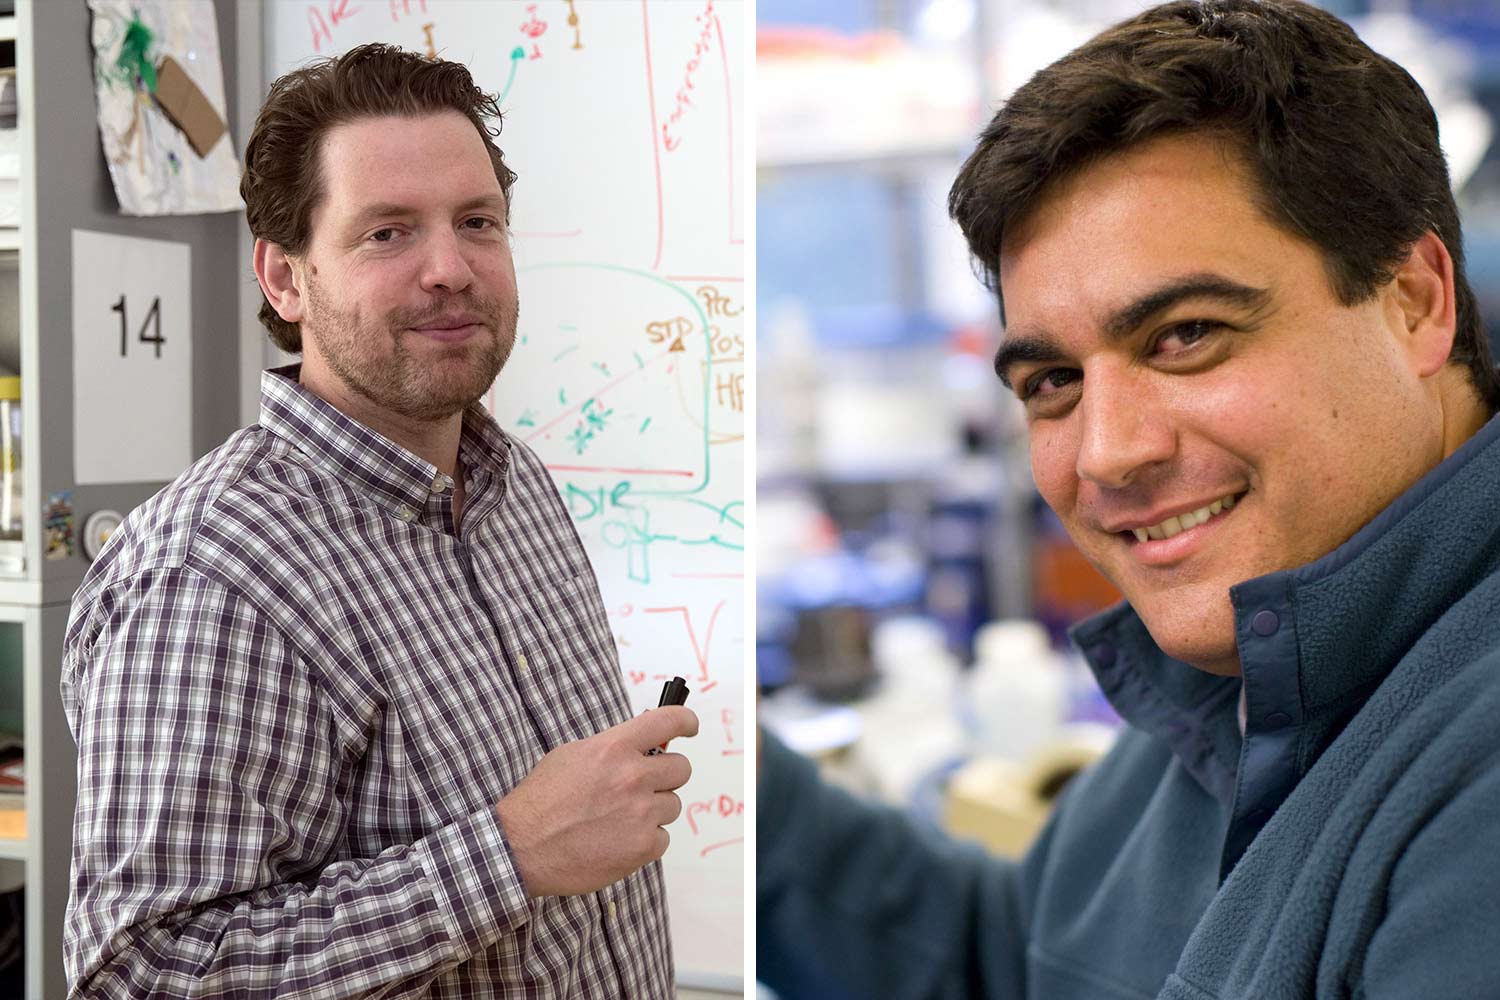 University of Virginia biology professors Ali Güler and Iggy Provencio